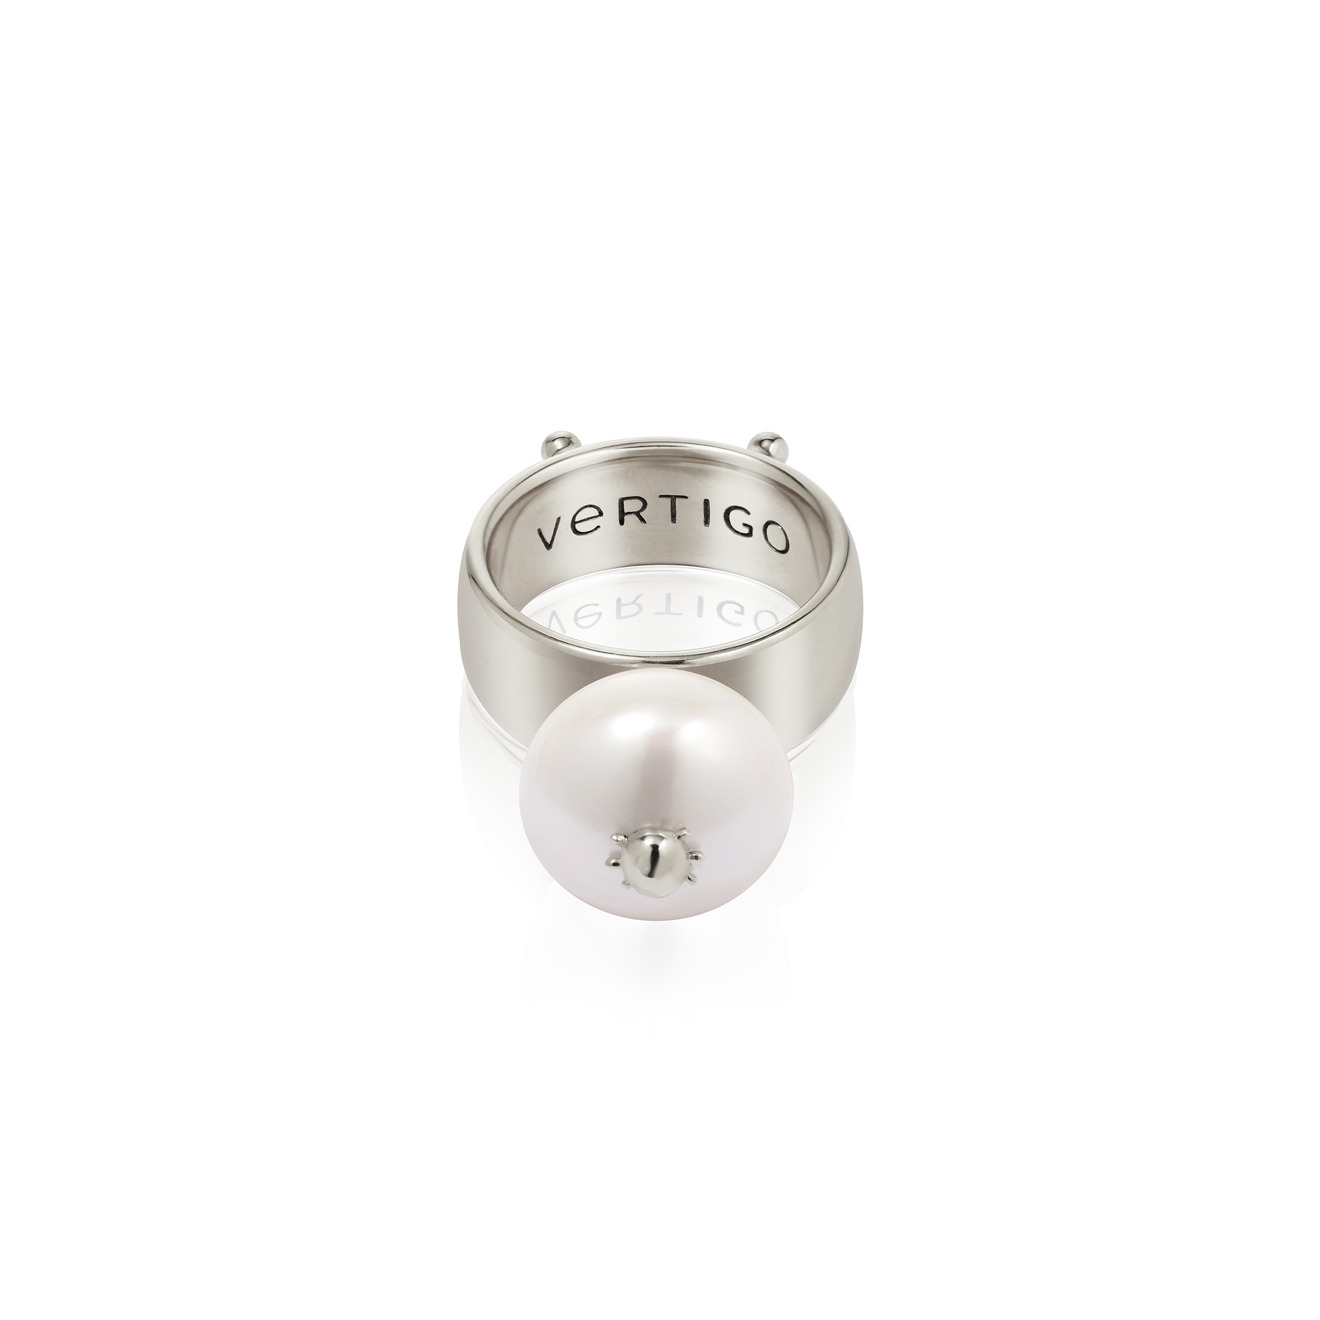 Vertigo Jewellery Lab Кольцо СLEOPTR LADYBUG RING из серебра с речным жемчугом vertigo jewellery lab кольцо сleoptr ladybug ring из серебра с речным жемчугом